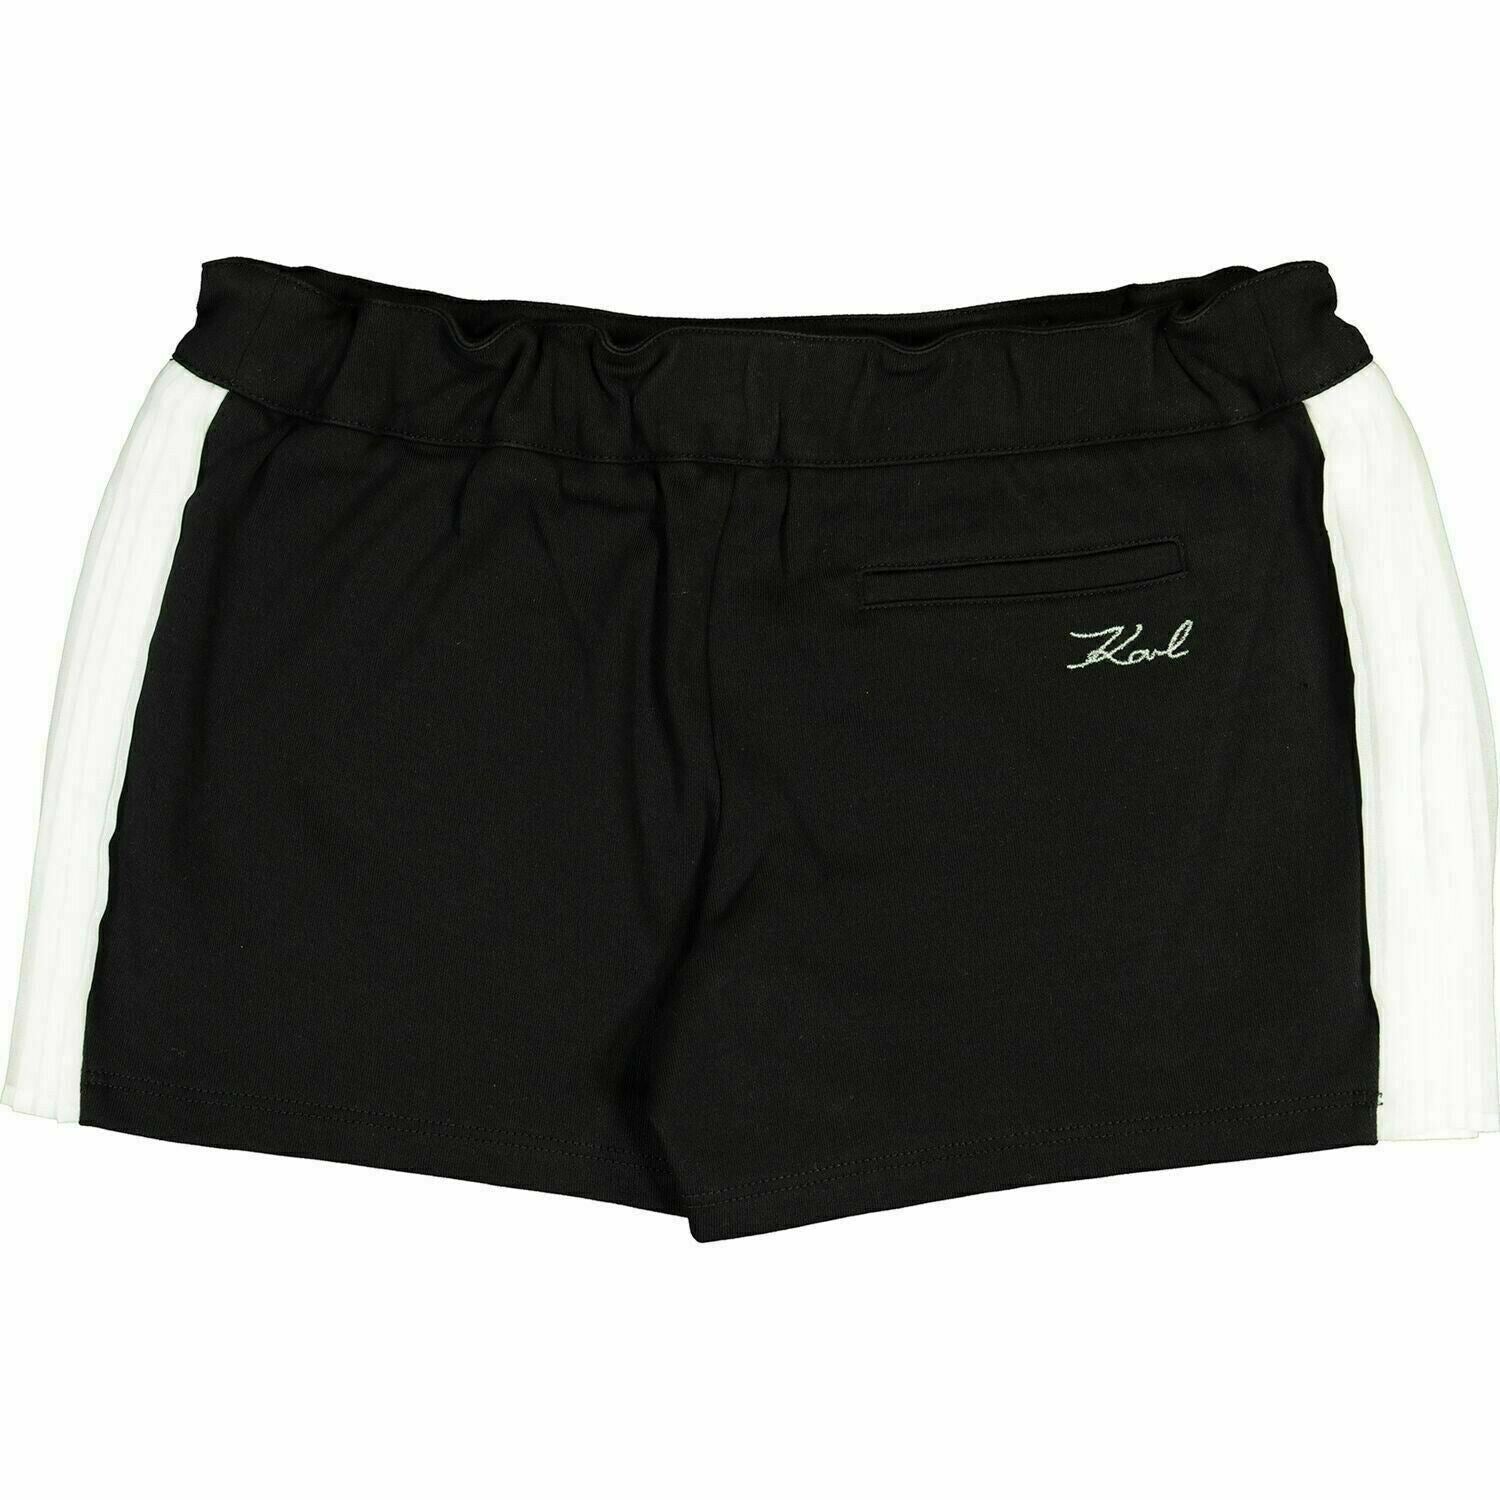 KARL LAGERFELD Girls' Kids' Black and White Shorts, size 8 years